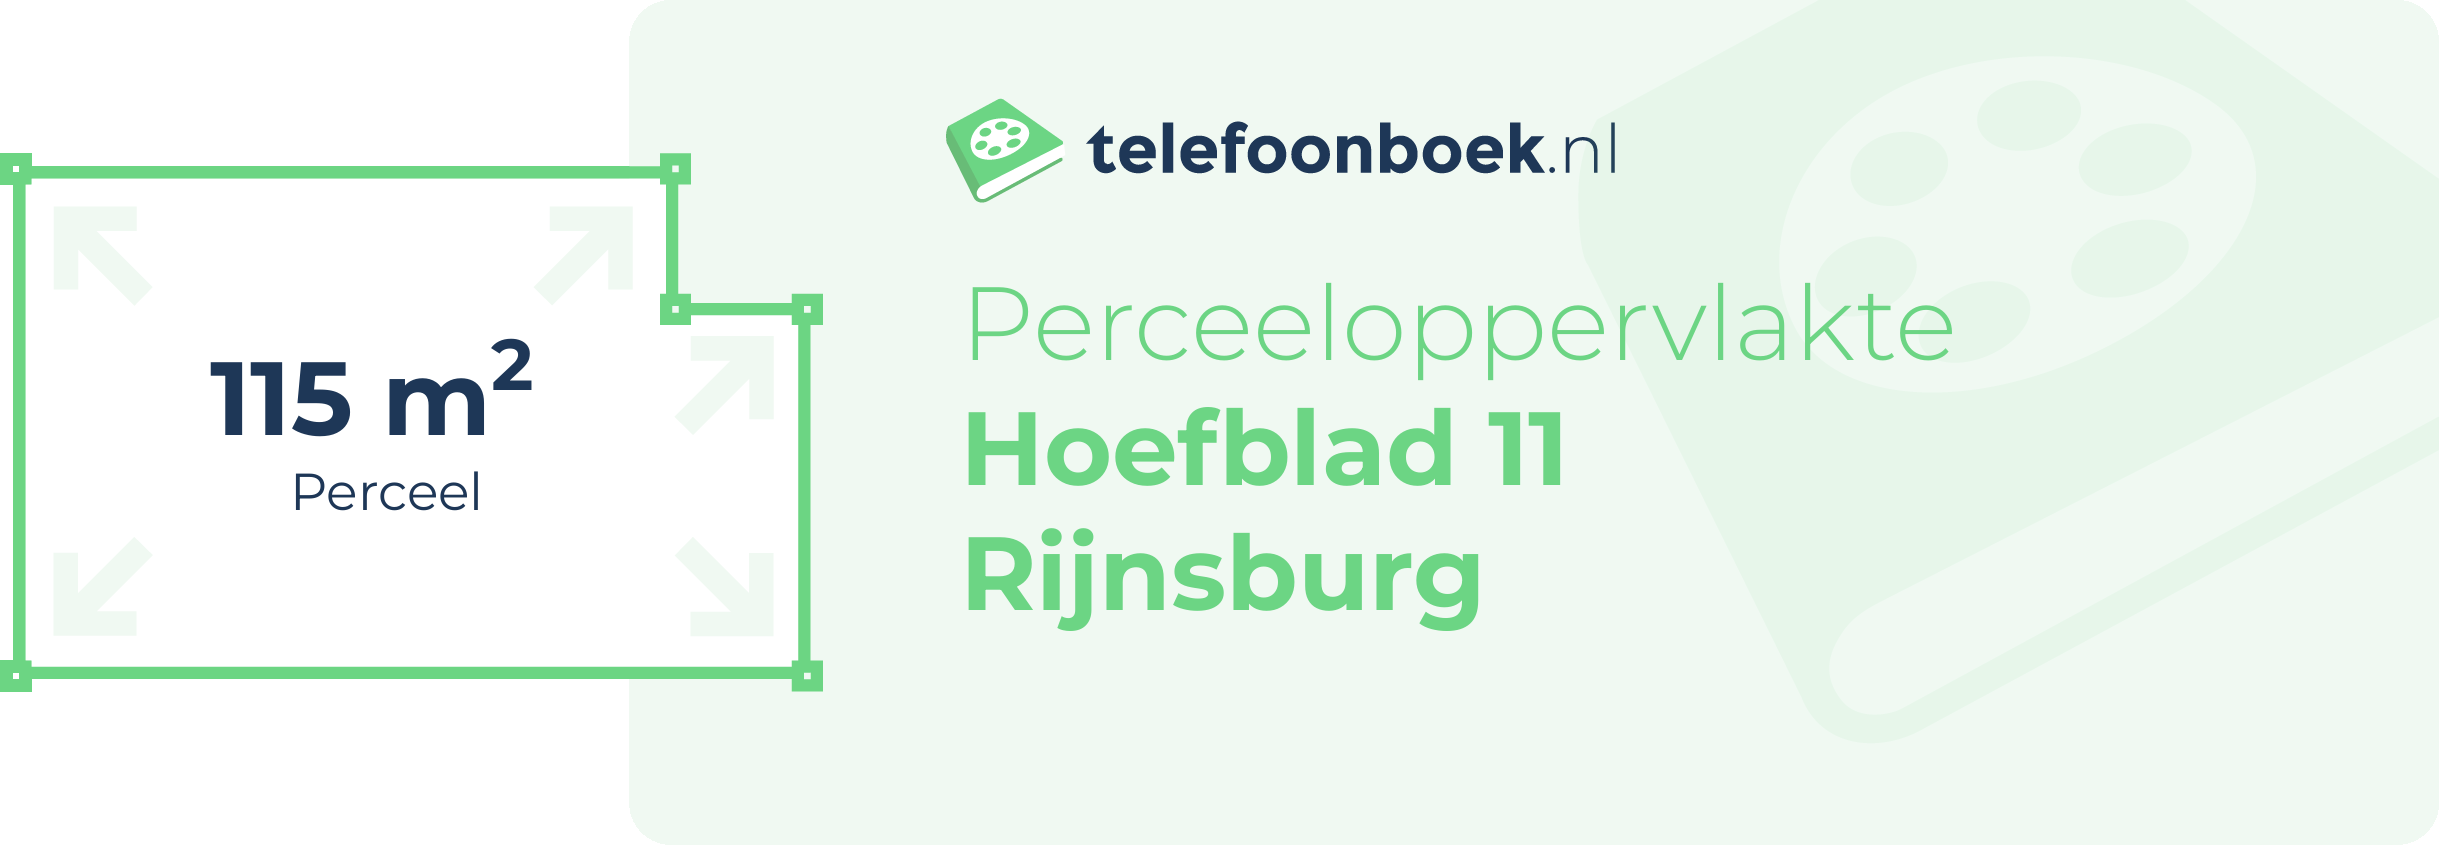 Perceeloppervlakte Hoefblad 11 Rijnsburg